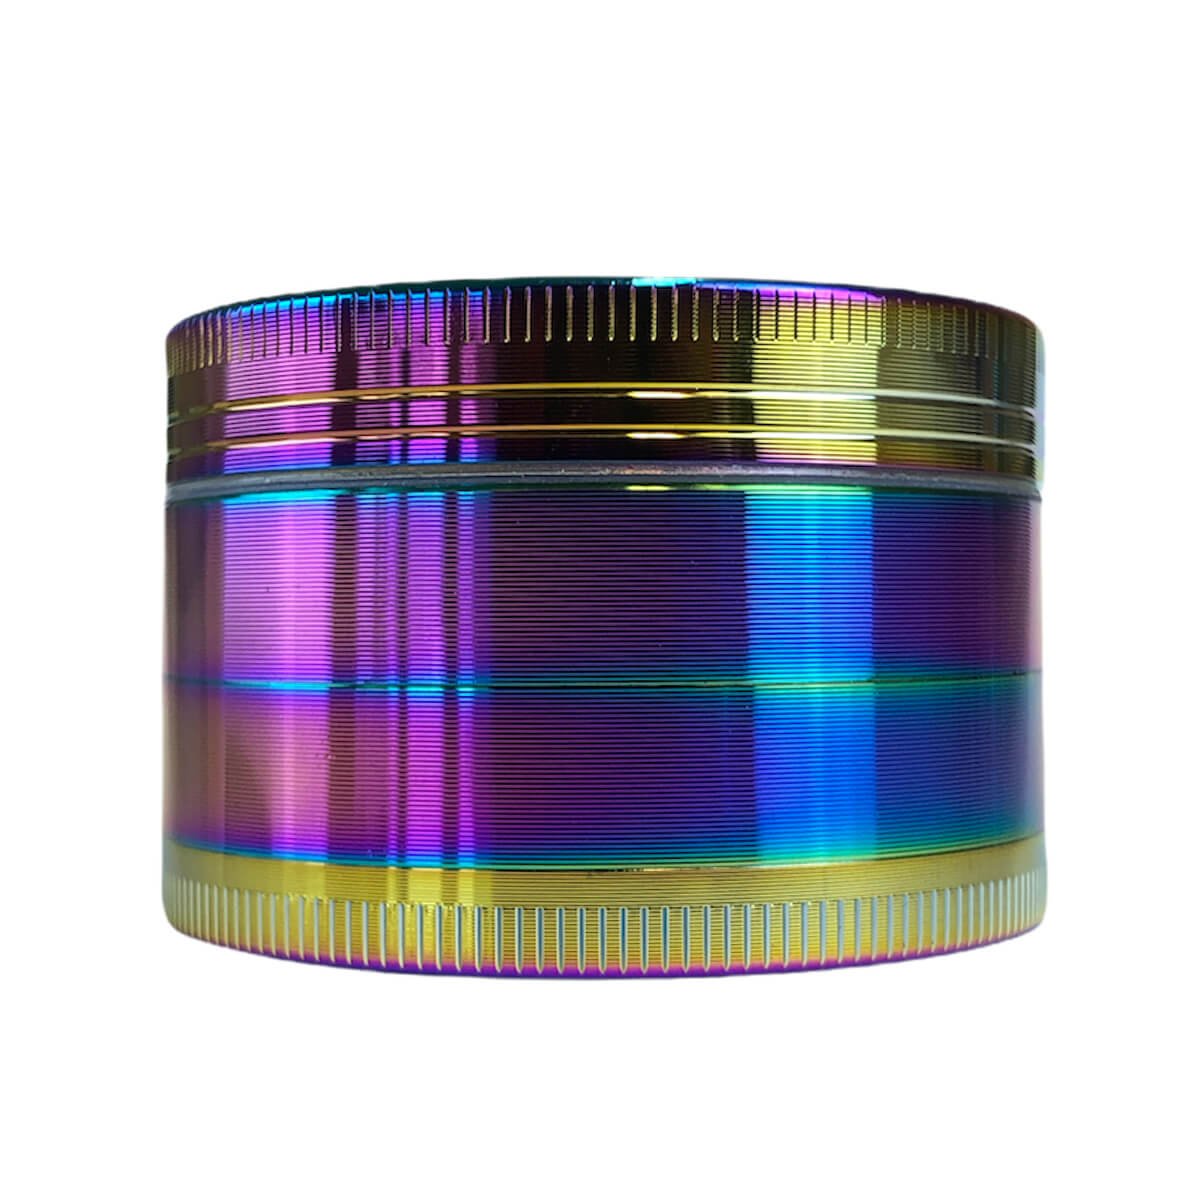 63mm 4 Part Rainbow color Metal Grinder W/ Window ( Buy 6 pc